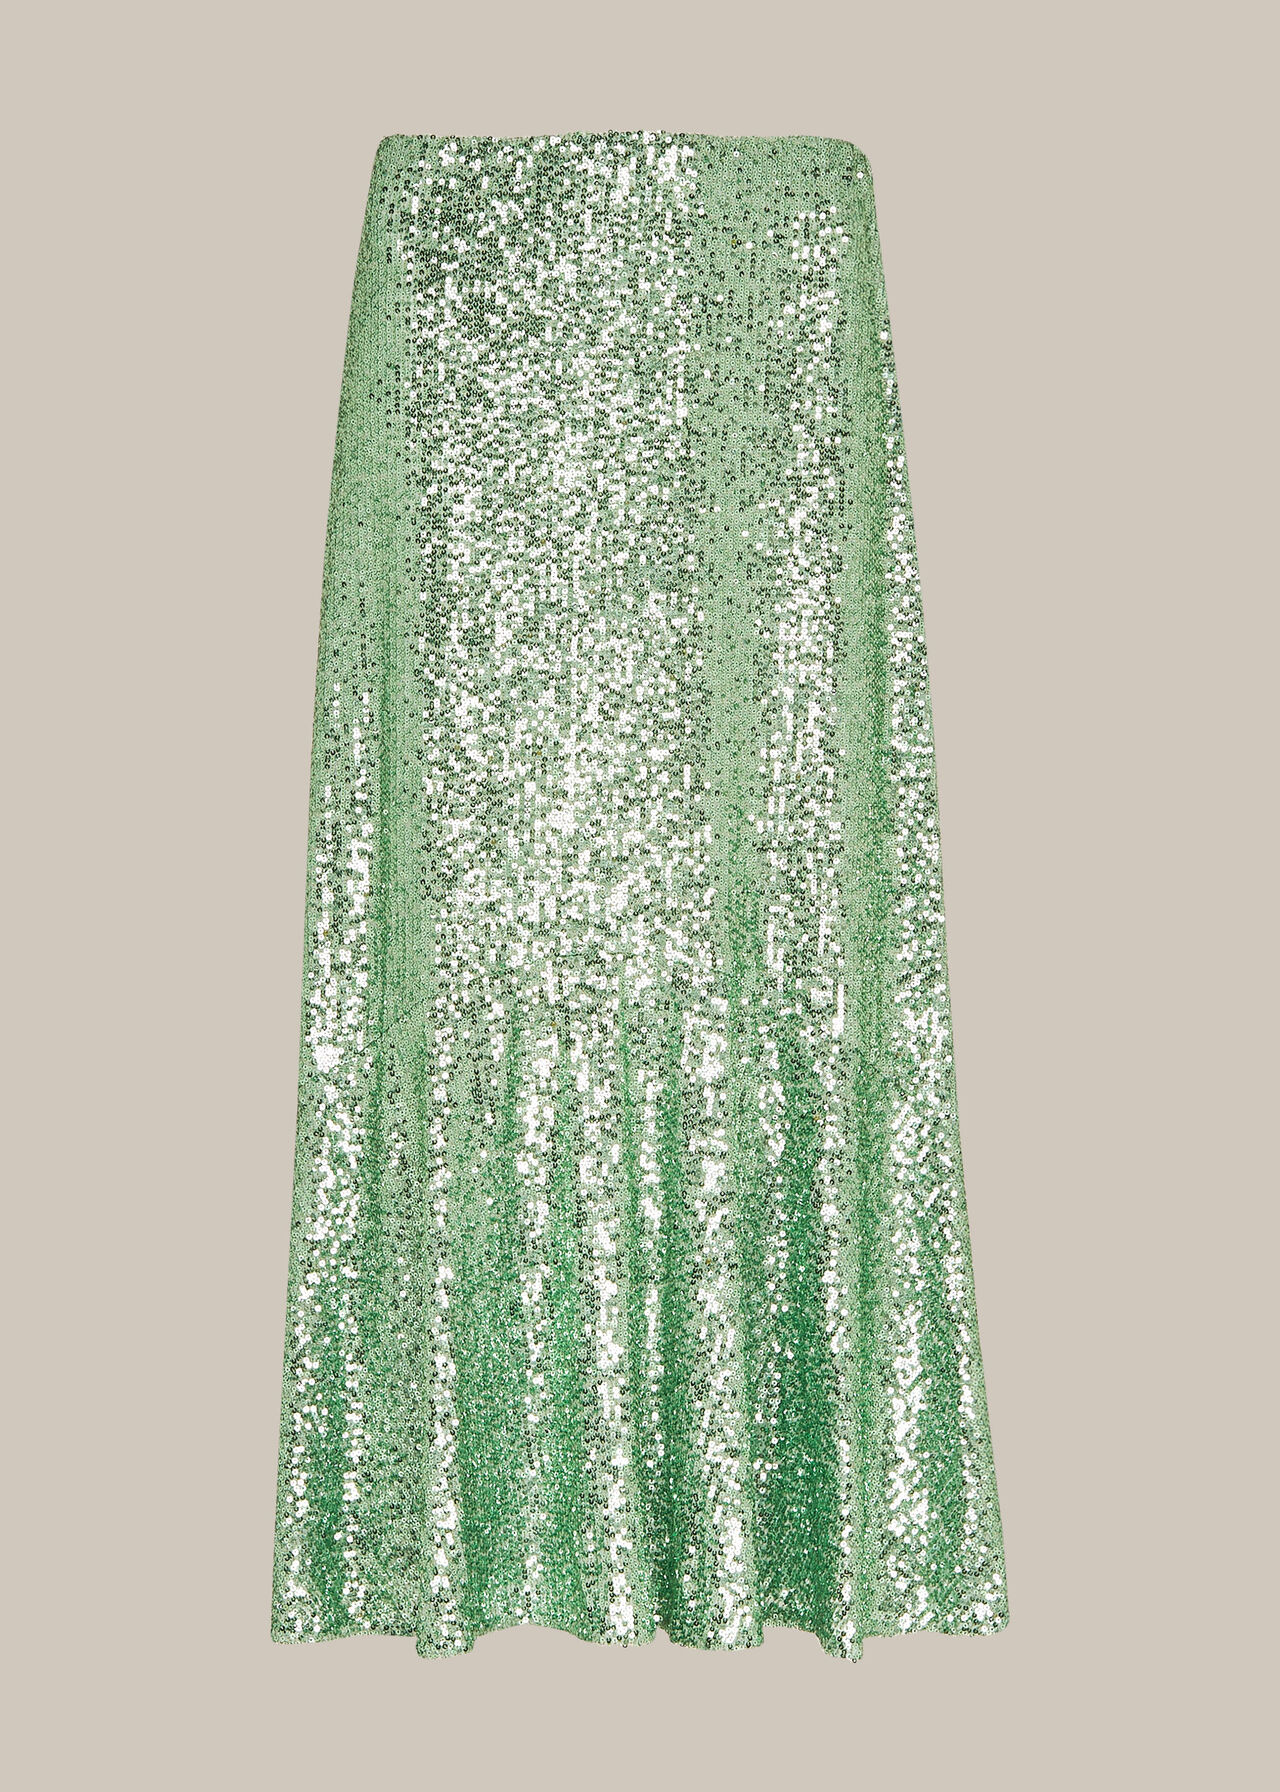 Green Suki Sequin Skirt | WHISTLES | Whistles